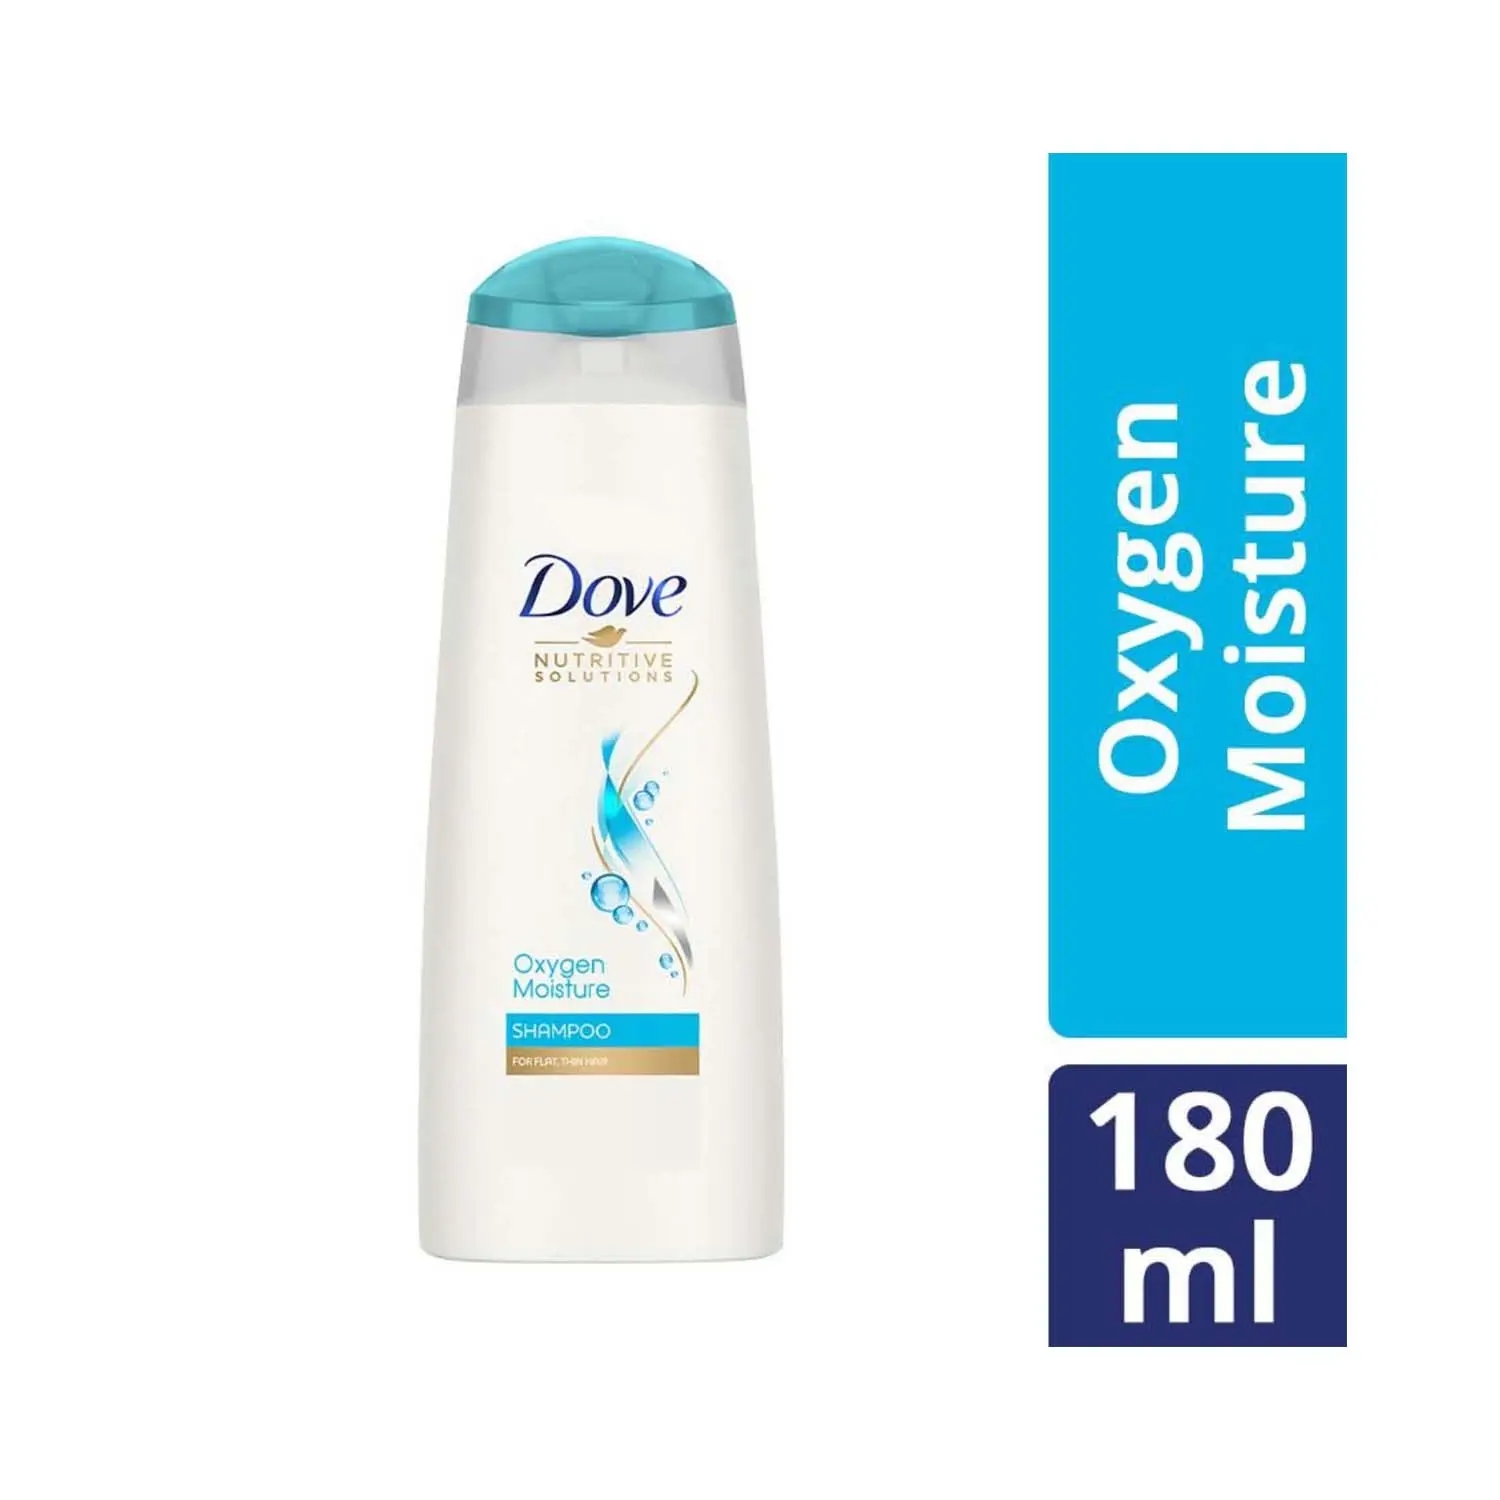 Dove | Dove Oxygen Moisture Hair Shampoo (180ml)